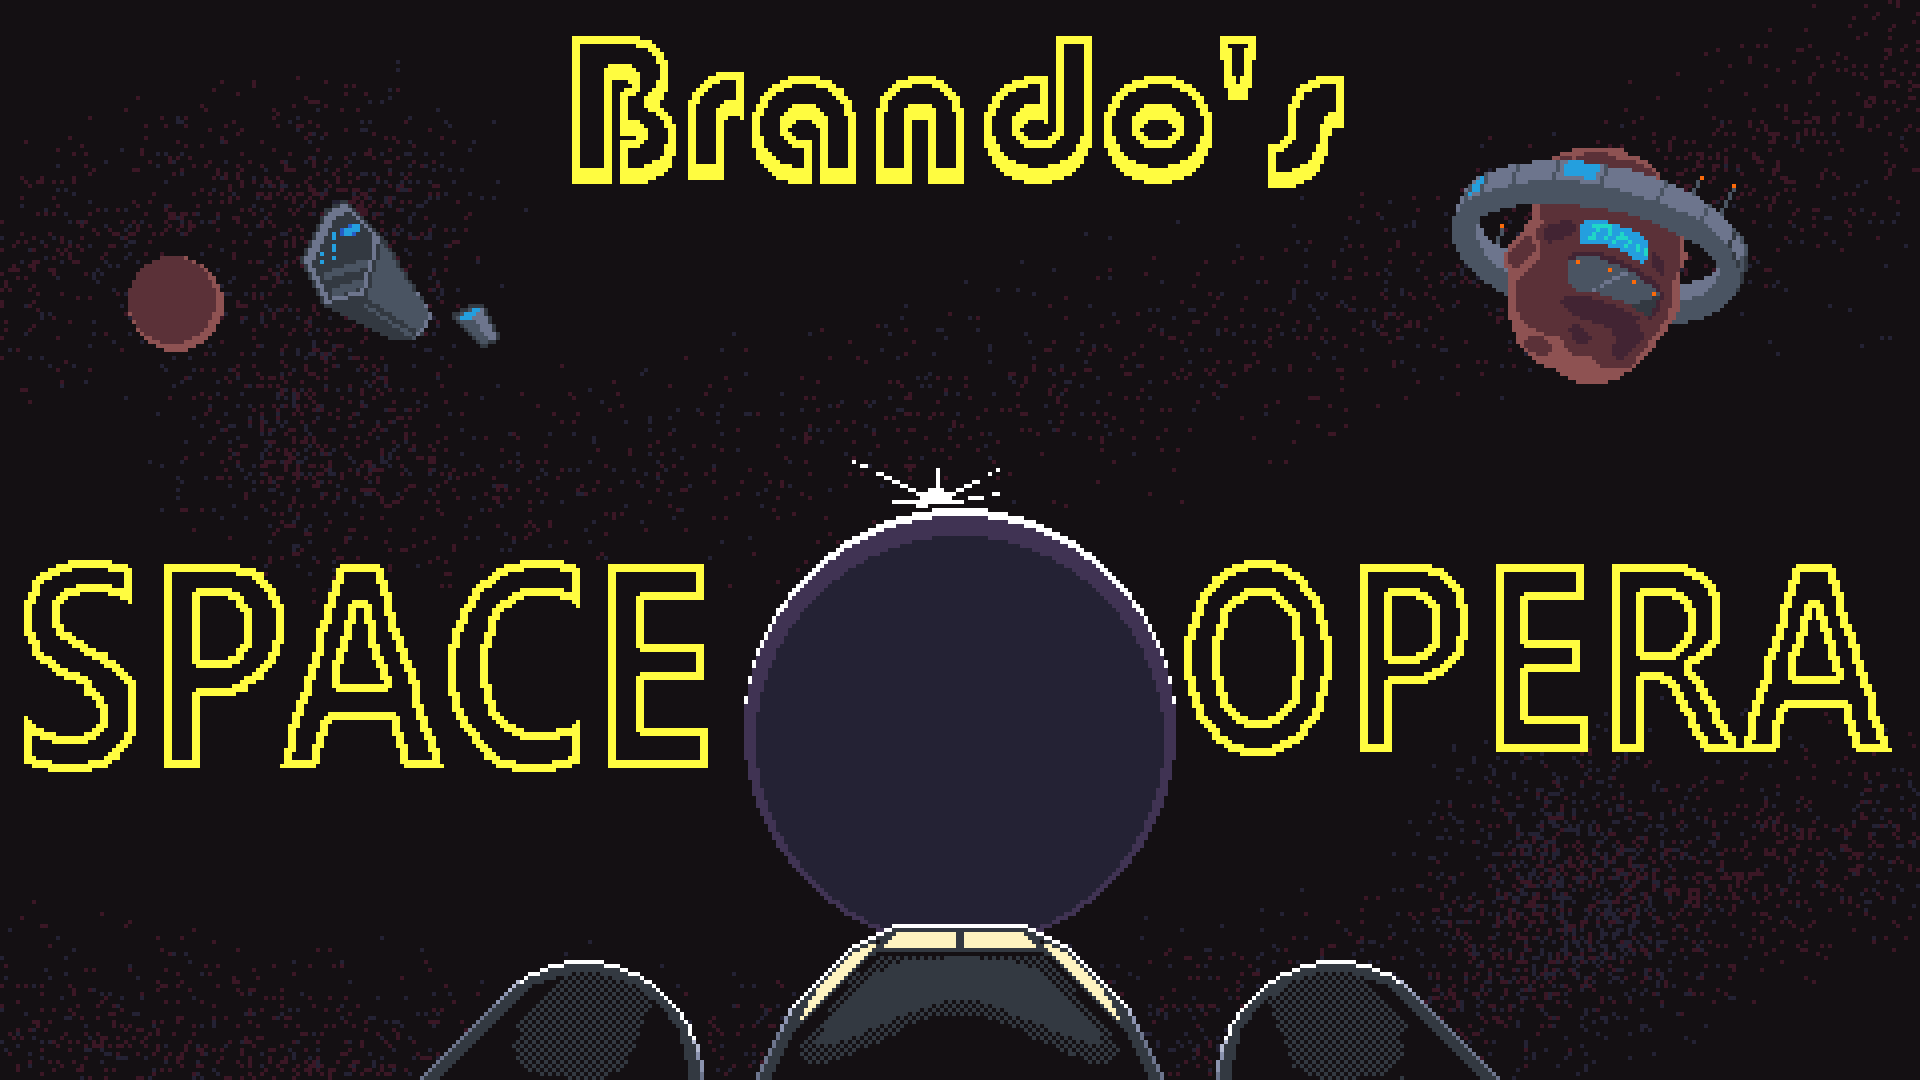 Brando's Space Opera